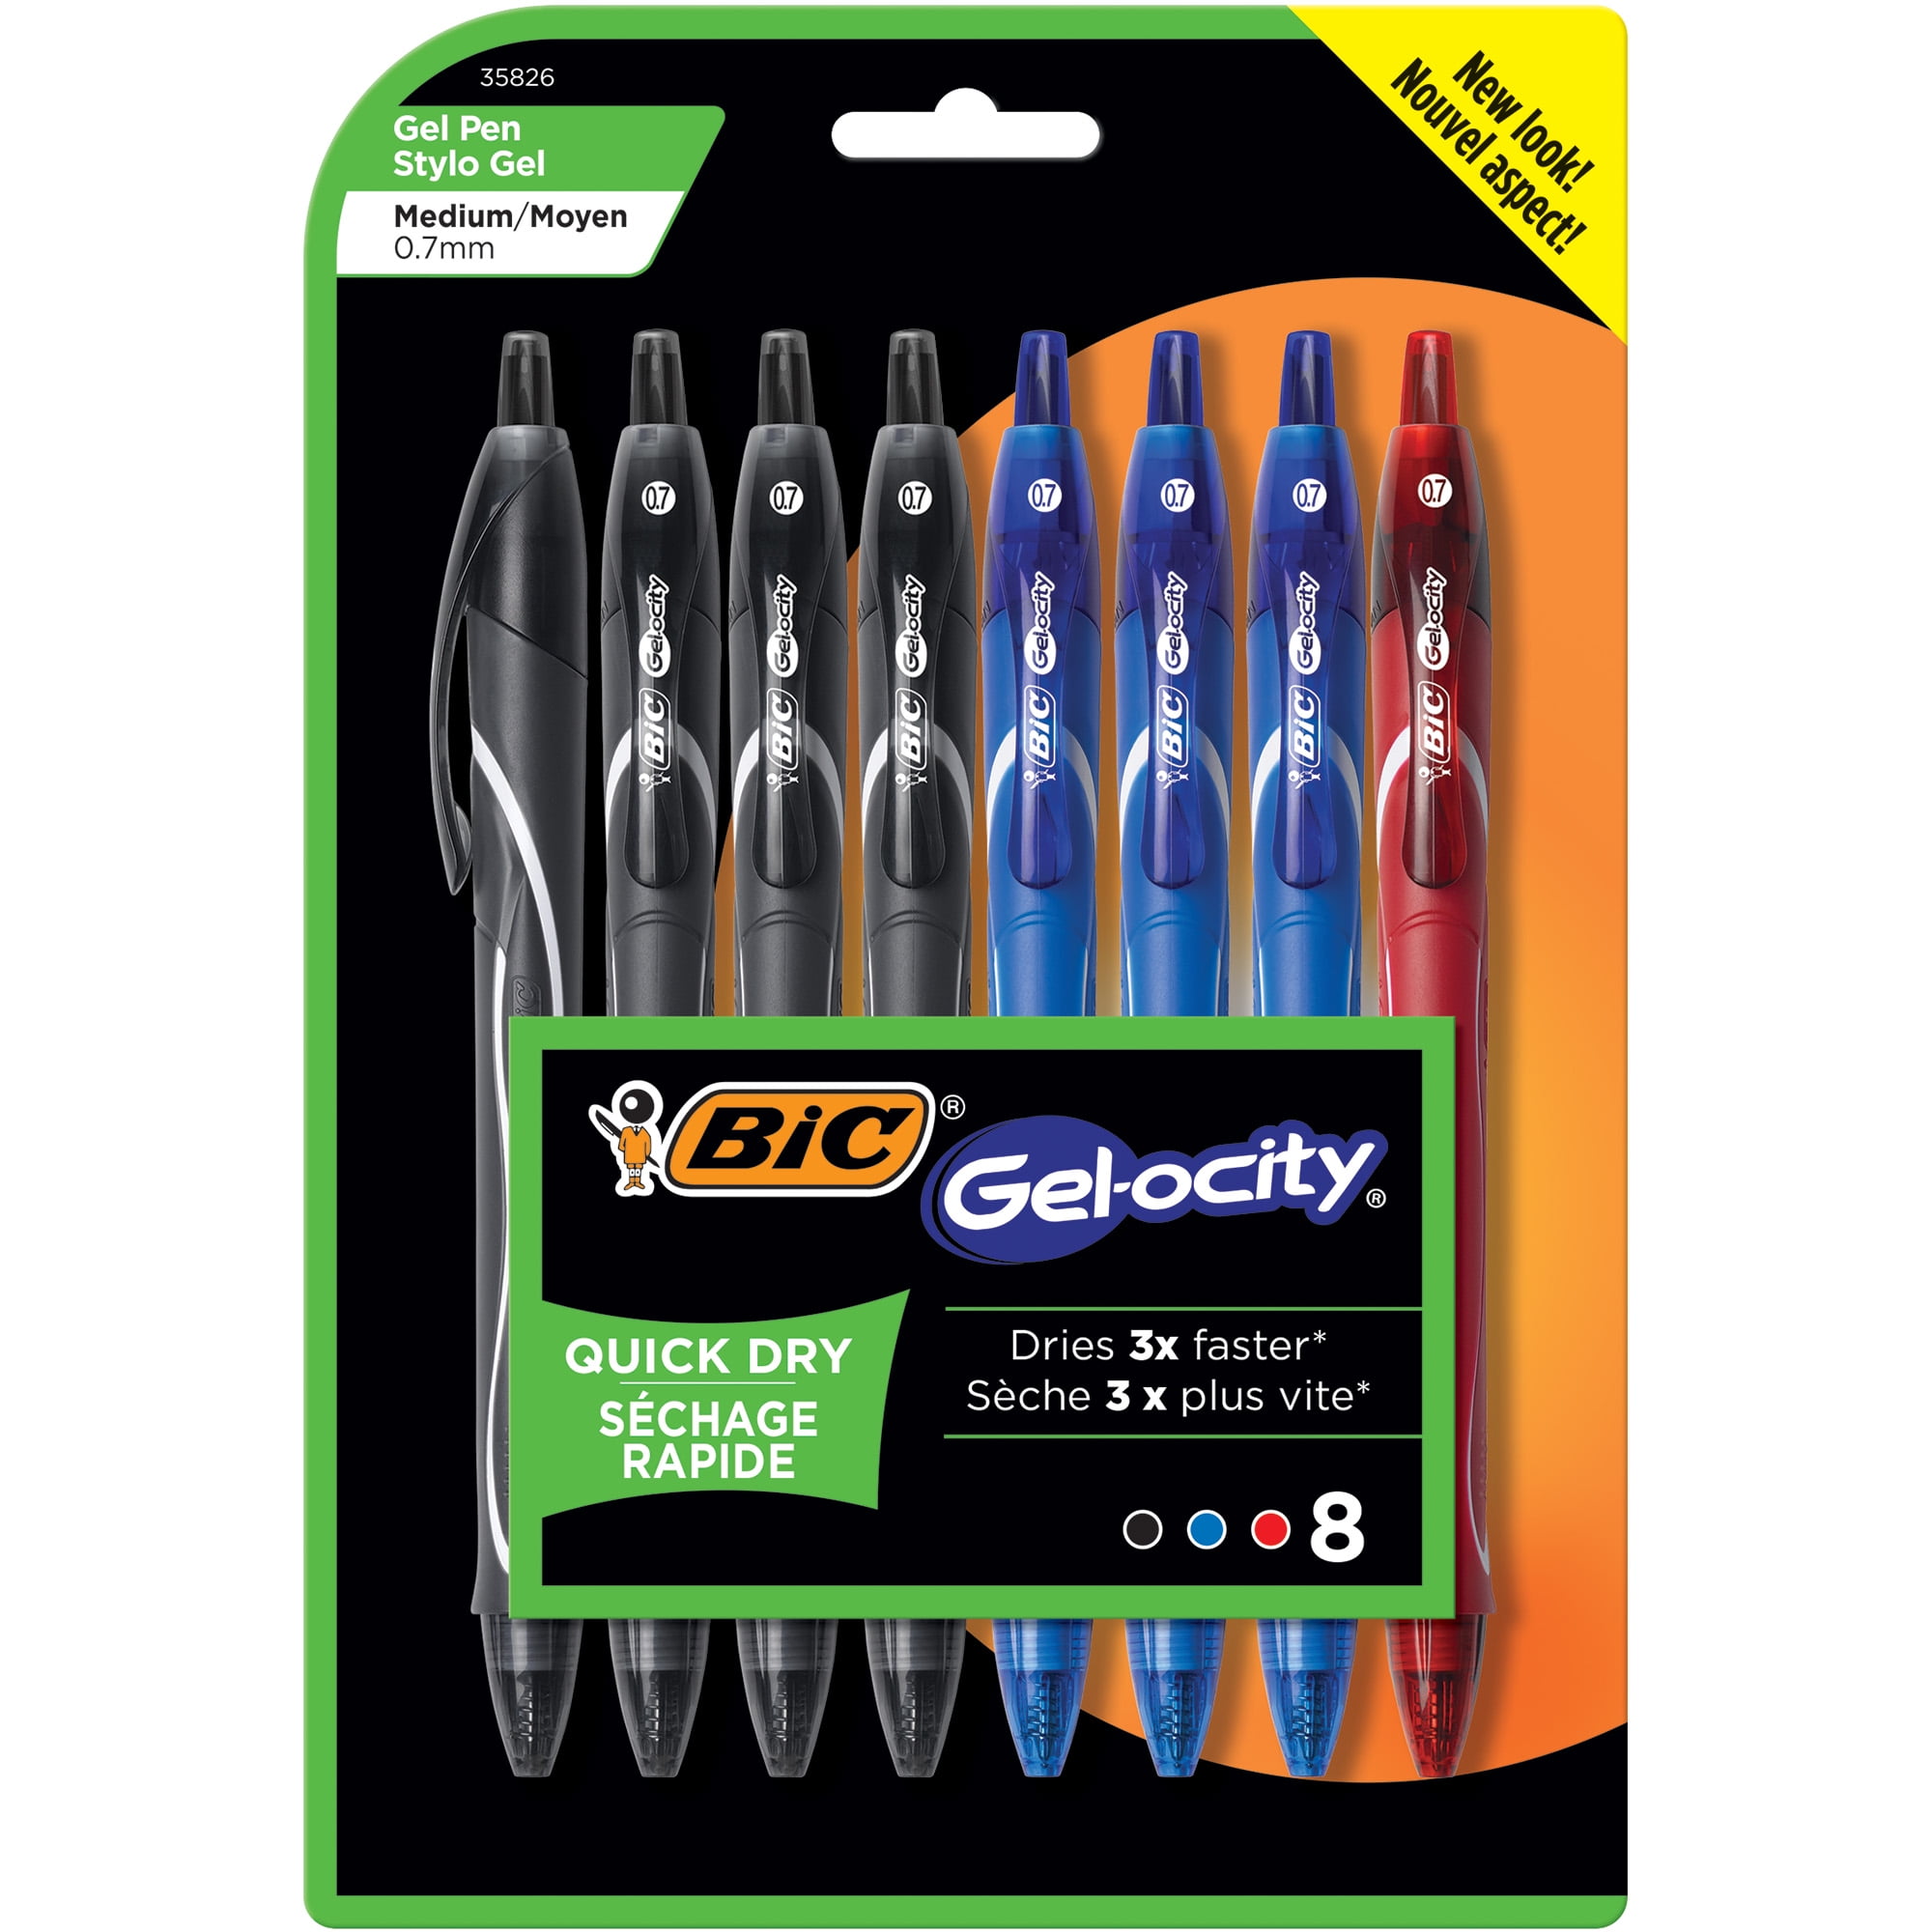 Gel-Ocity Quick Dry Gel Pens Unit Medium Point Retractable Gel Pen Assorted Colors 12-Count Improved Version 0.7mm 